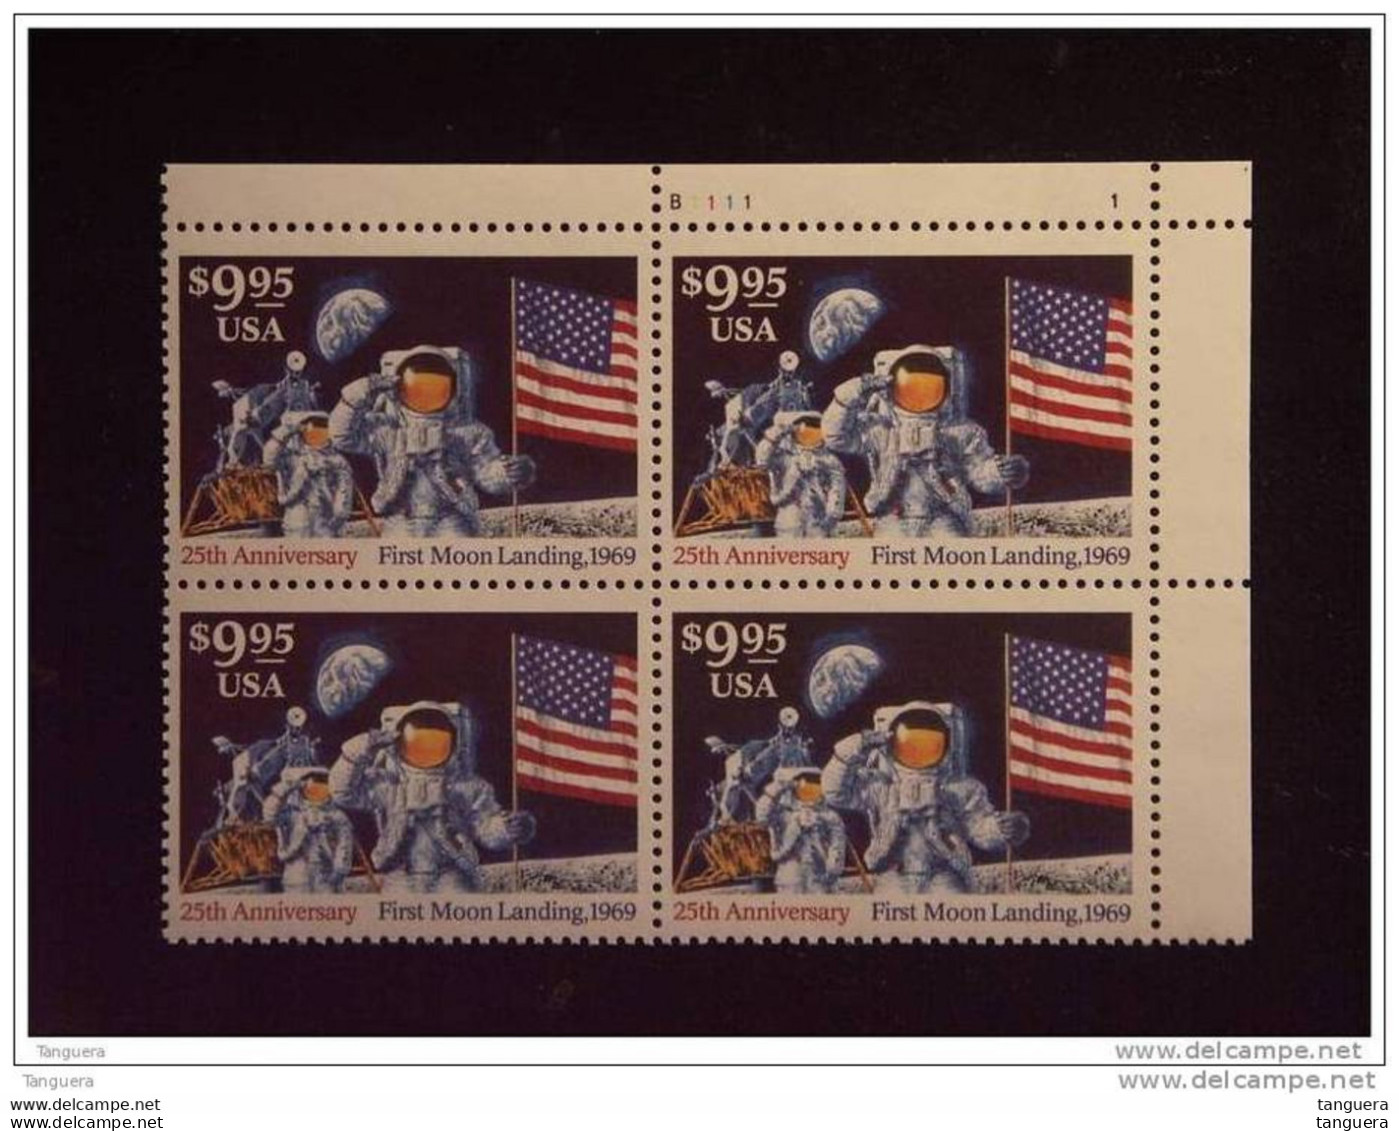 USA Etats-Unis D'Amerique United States 1994 Moon Landing Bloc Of 4 X Yv 2259 MNH ** Plate N° B1111 - Plate Blocks & Sheetlets